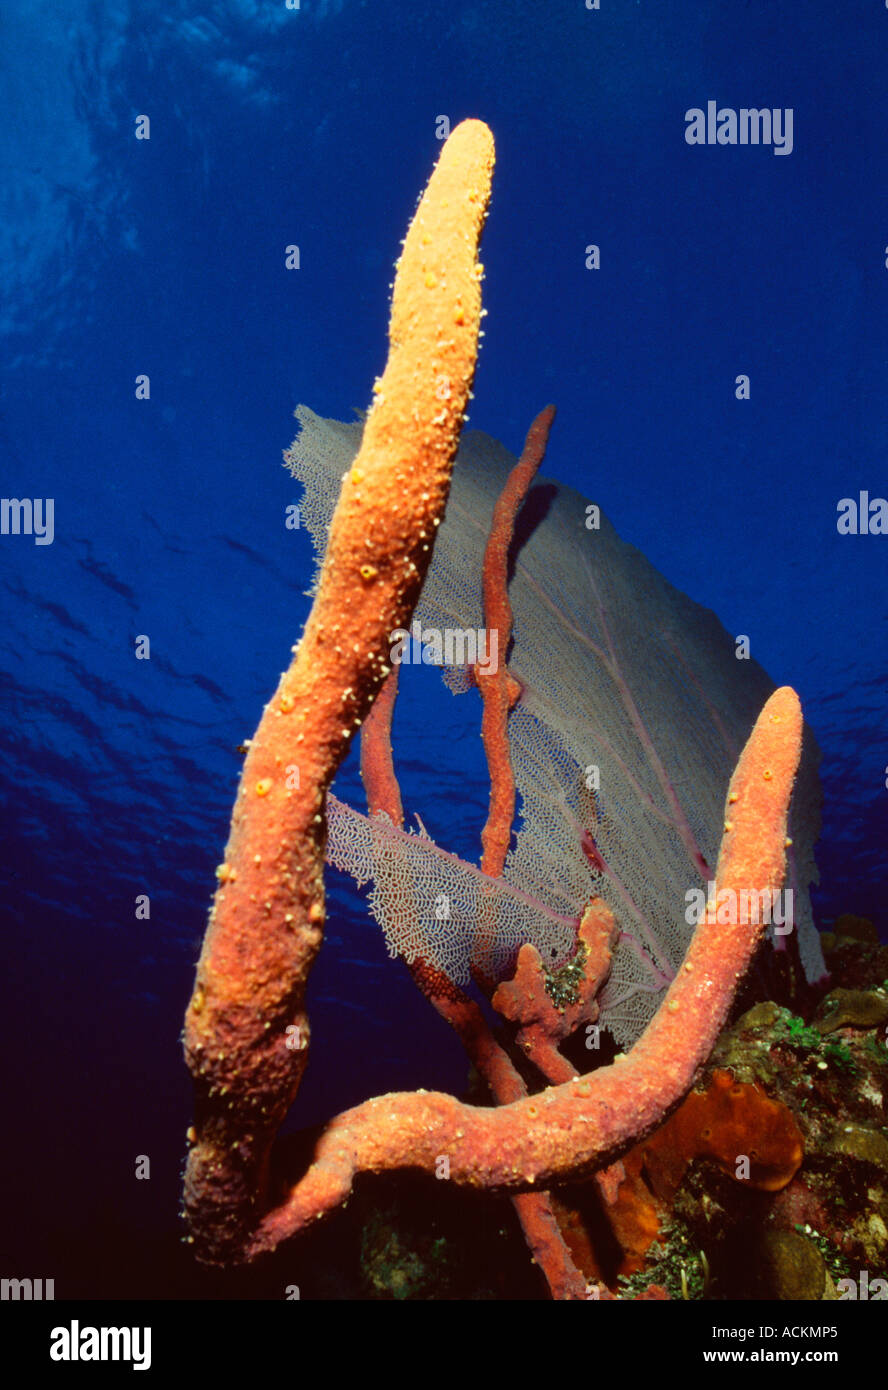 BWI Grand Cayman Cayman Islands underwater Orange Sponge with Sea Fan in background Stock Photo